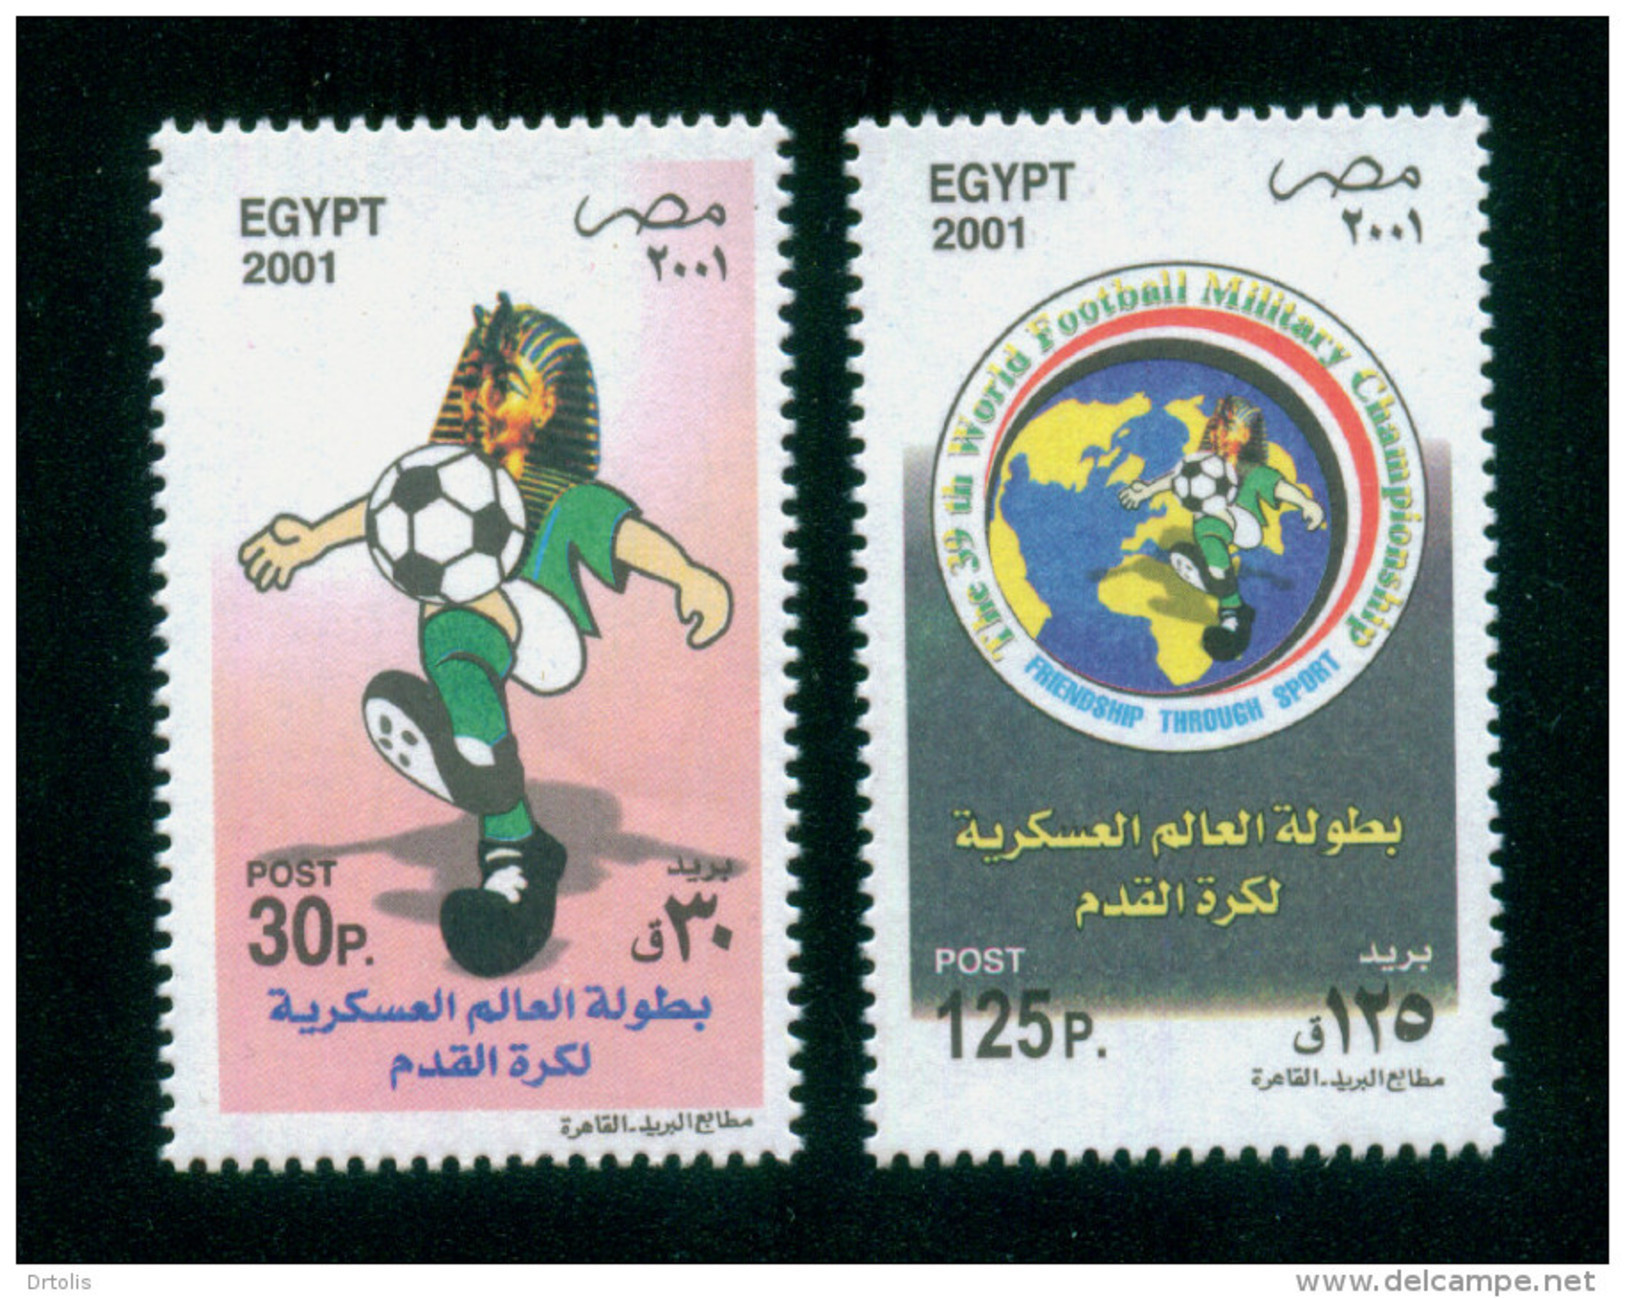 EGYPT / 2001 / SPORT / FOOTBALL / WORLD MILITARY FOOTBALL CHAMPIONSHIP / TUT ANKH AMUN / MAP / FLAG / MNH / VF - Nuovi